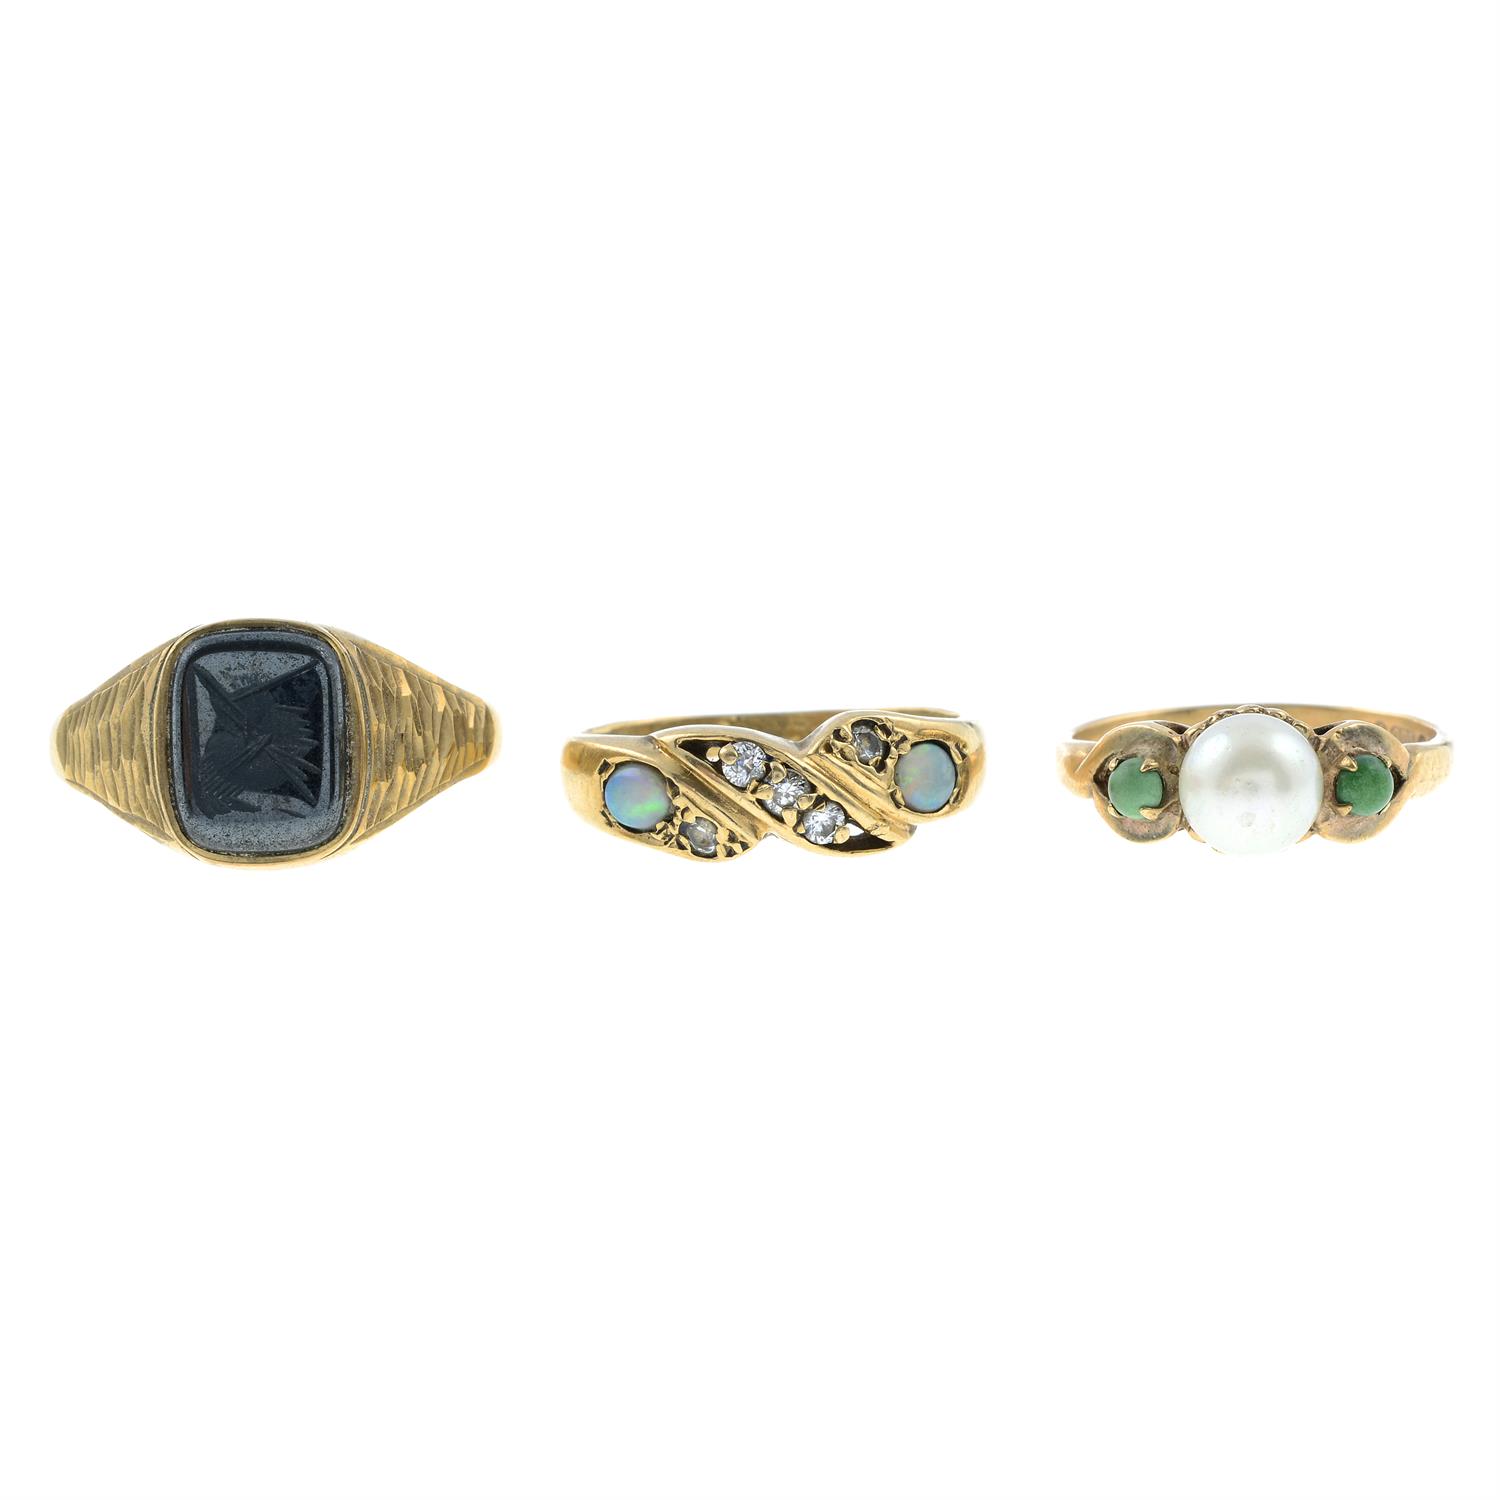 Three 9ct gold gem-set rings. - Image 3 of 4